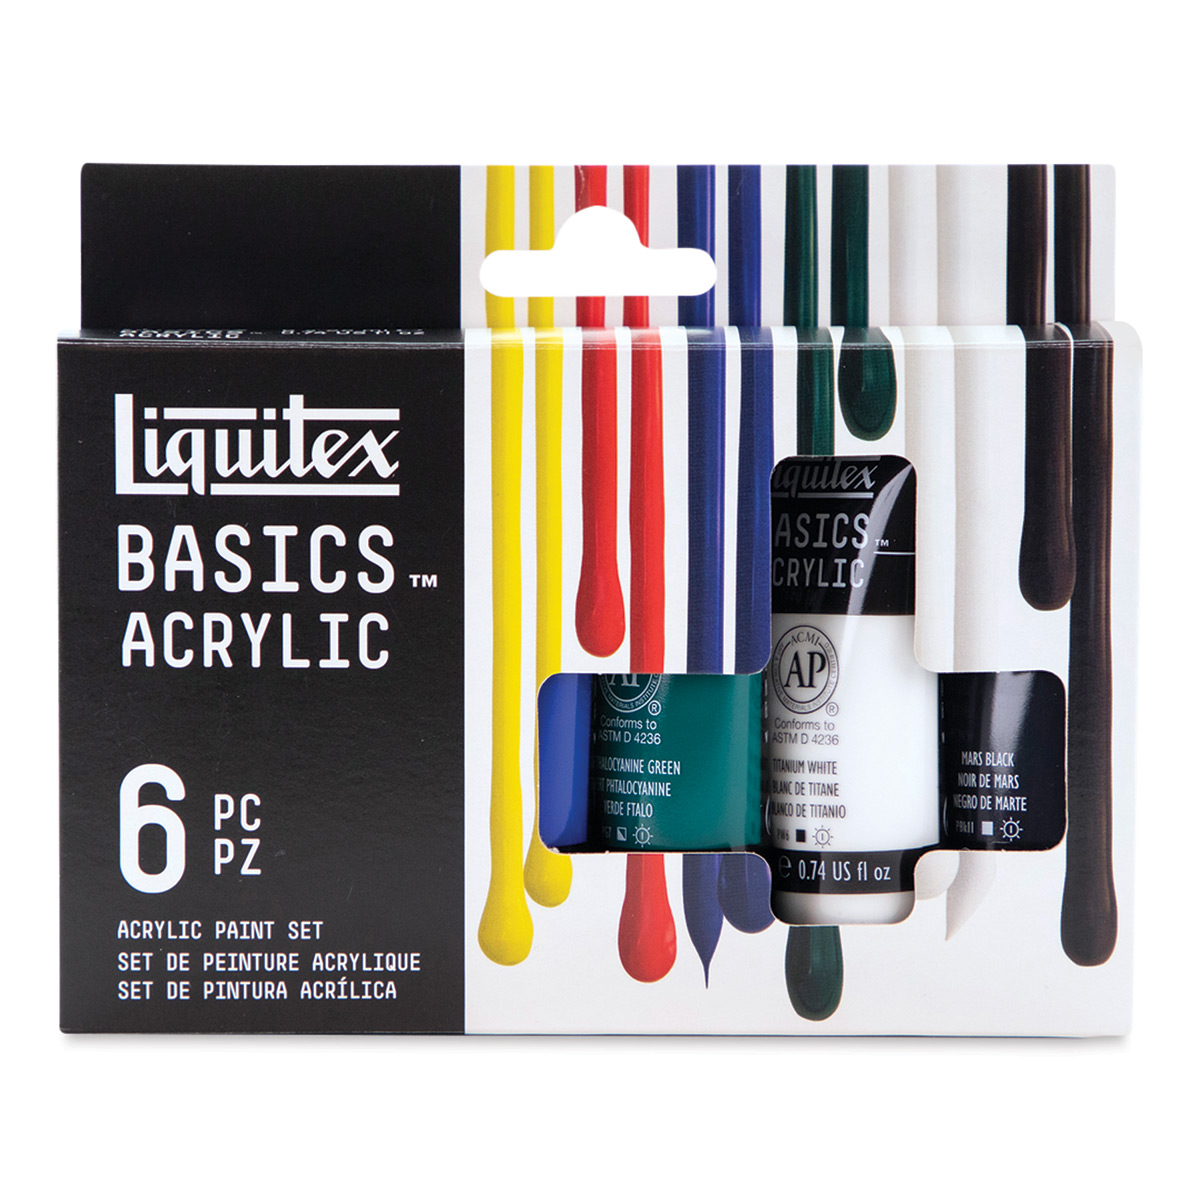 Liquitex BASICS Acrylic Primary Colors Set of 3, 4oz